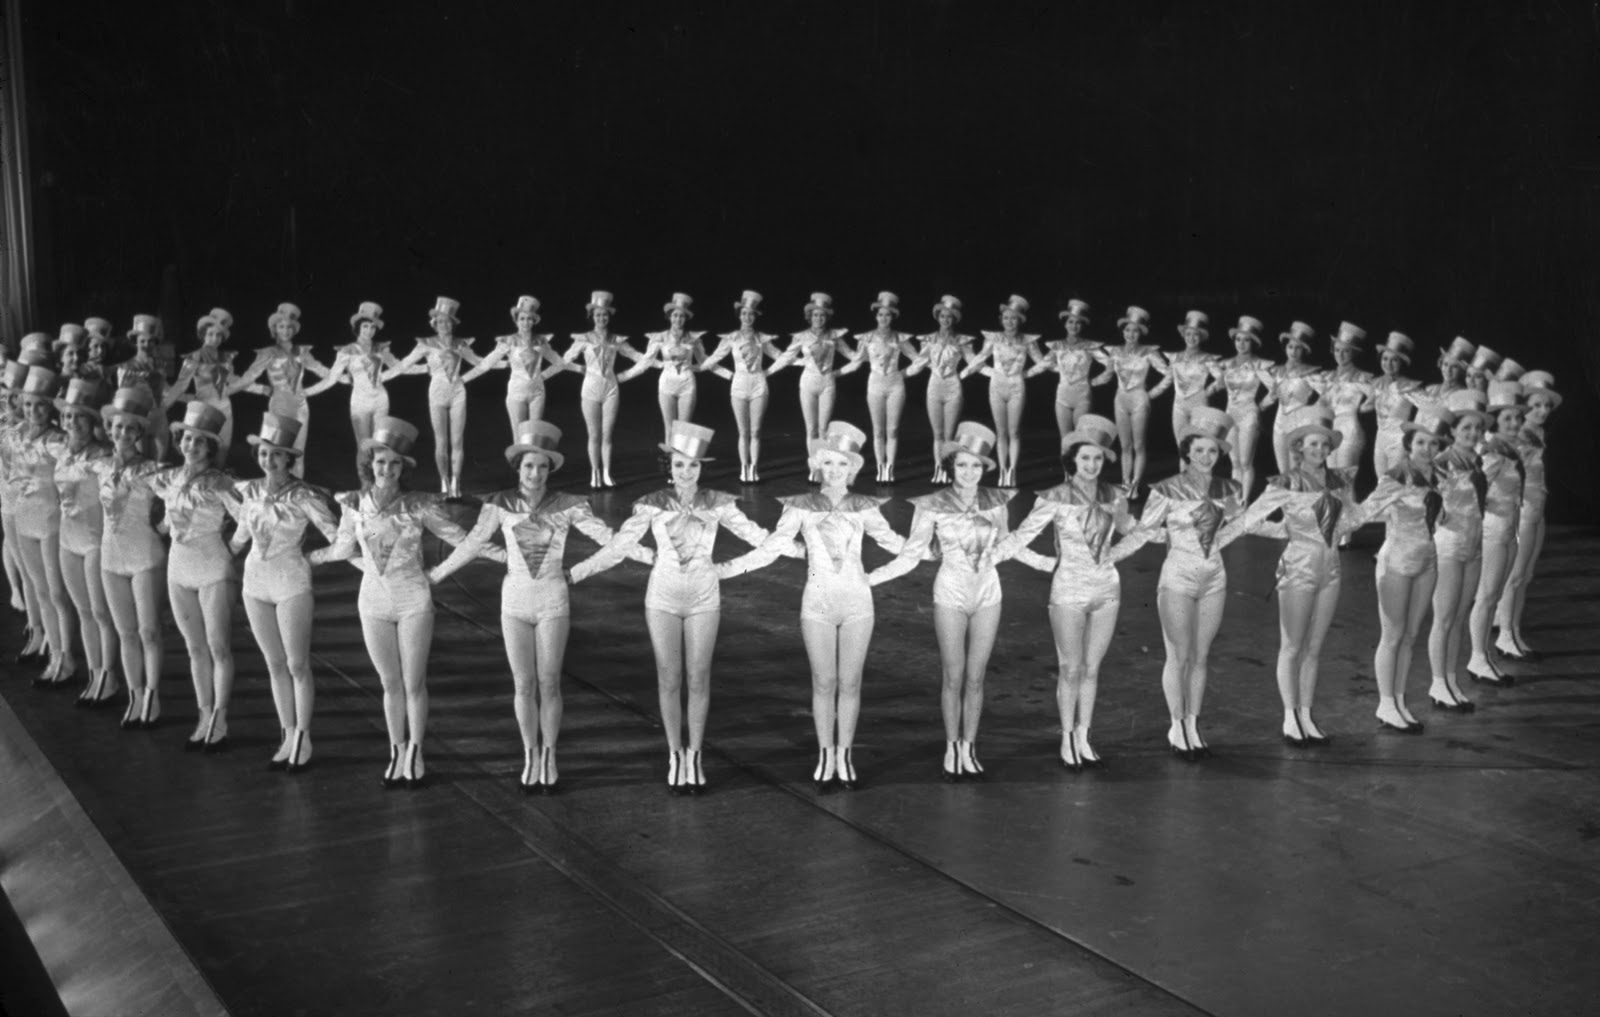 http://2.bp.blogspot.com/-sn1y0zRml3g/TWOjdo0JuJI/AAAAAAAACGQ/Q5PlCkBWXM4/s1600/The+Rockettes+1933.jpg